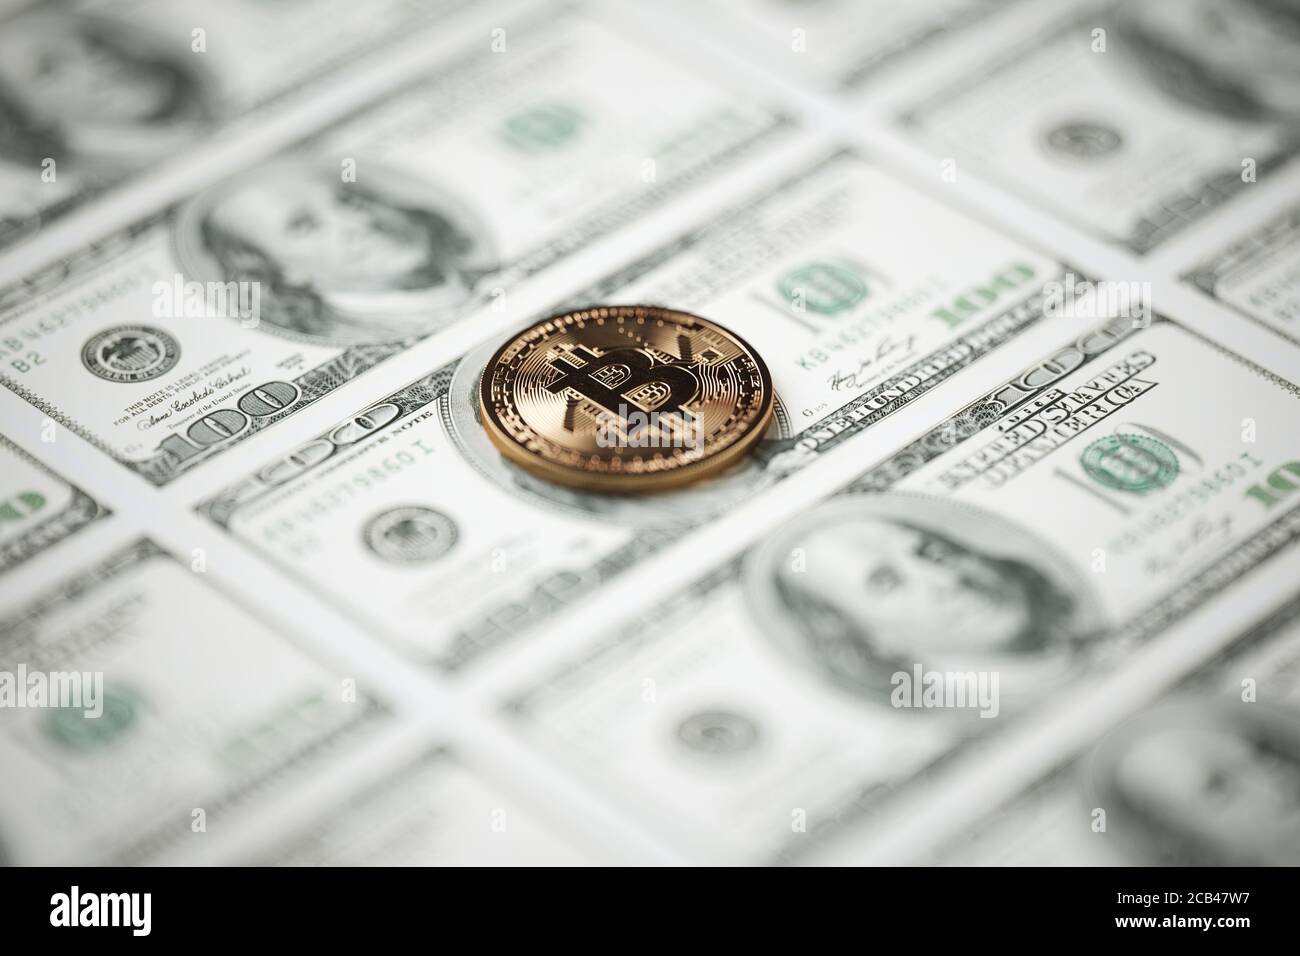 One Bitcoin on hundred dollars bills. Closeup dof, macro shot. 3d rendering illustration Stock Photo